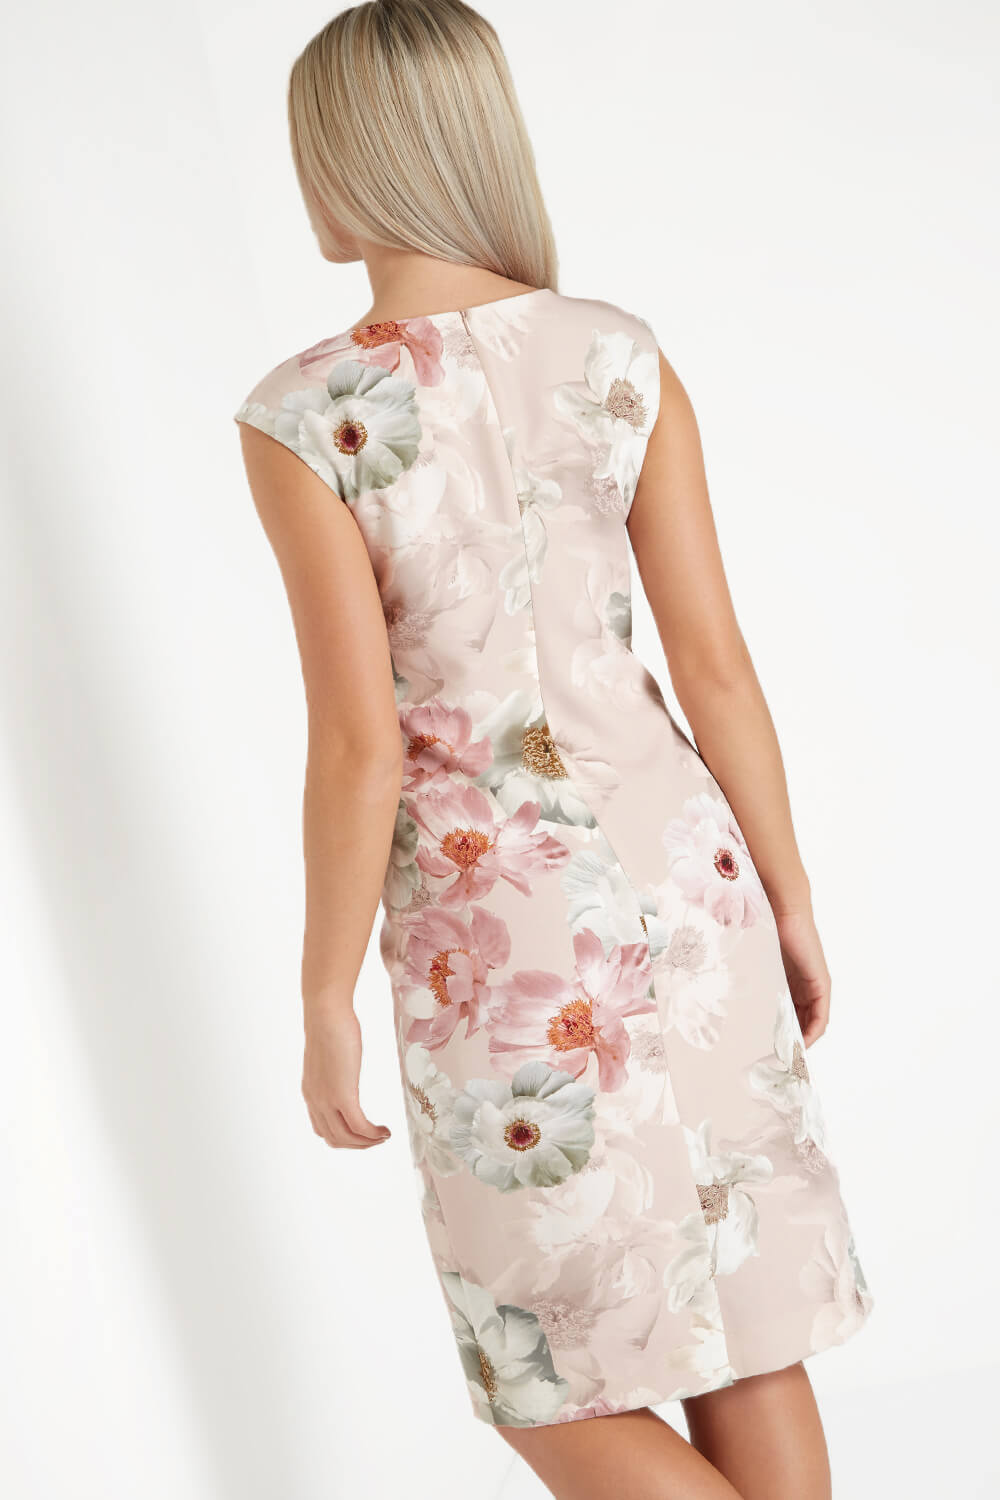 PINK Floral Print Scuba Dress, Image 3 of 5